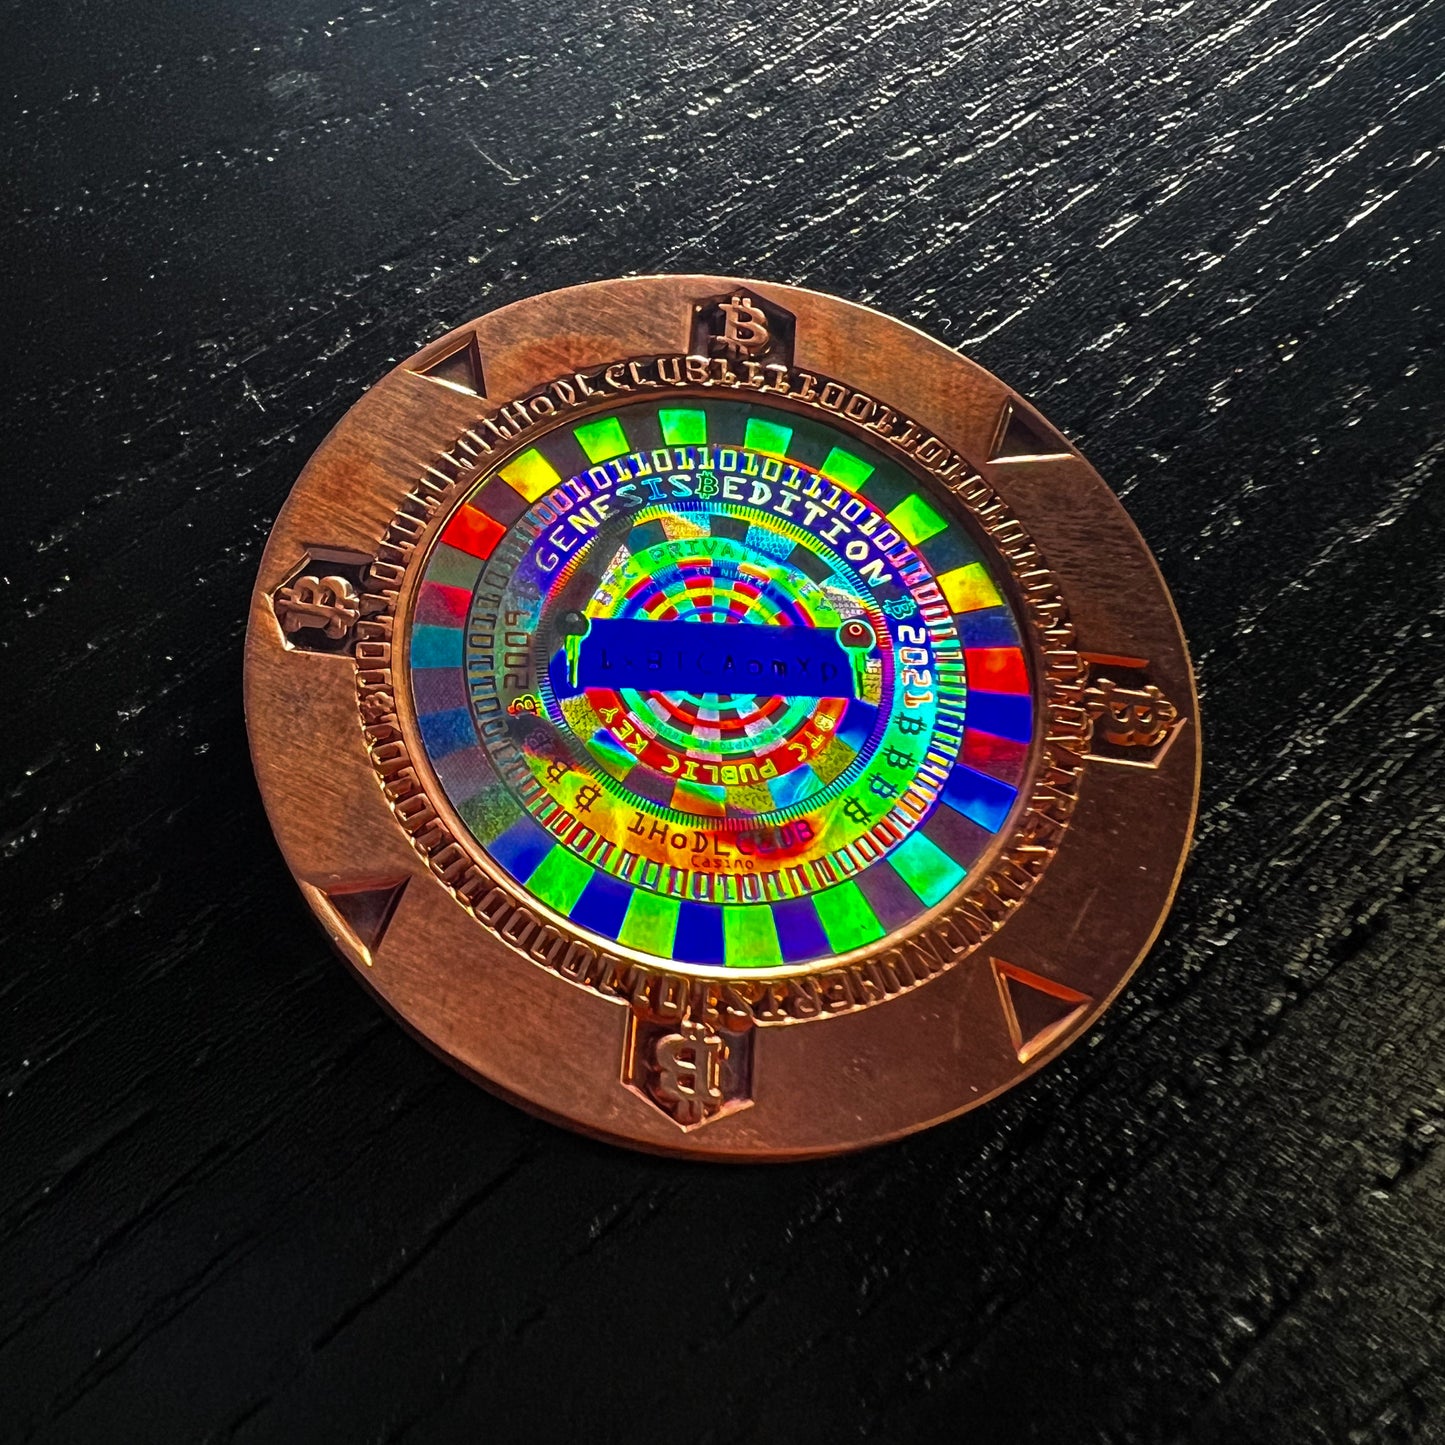 2021 1HoDLCLUB Copper BTC Poker chips N°201